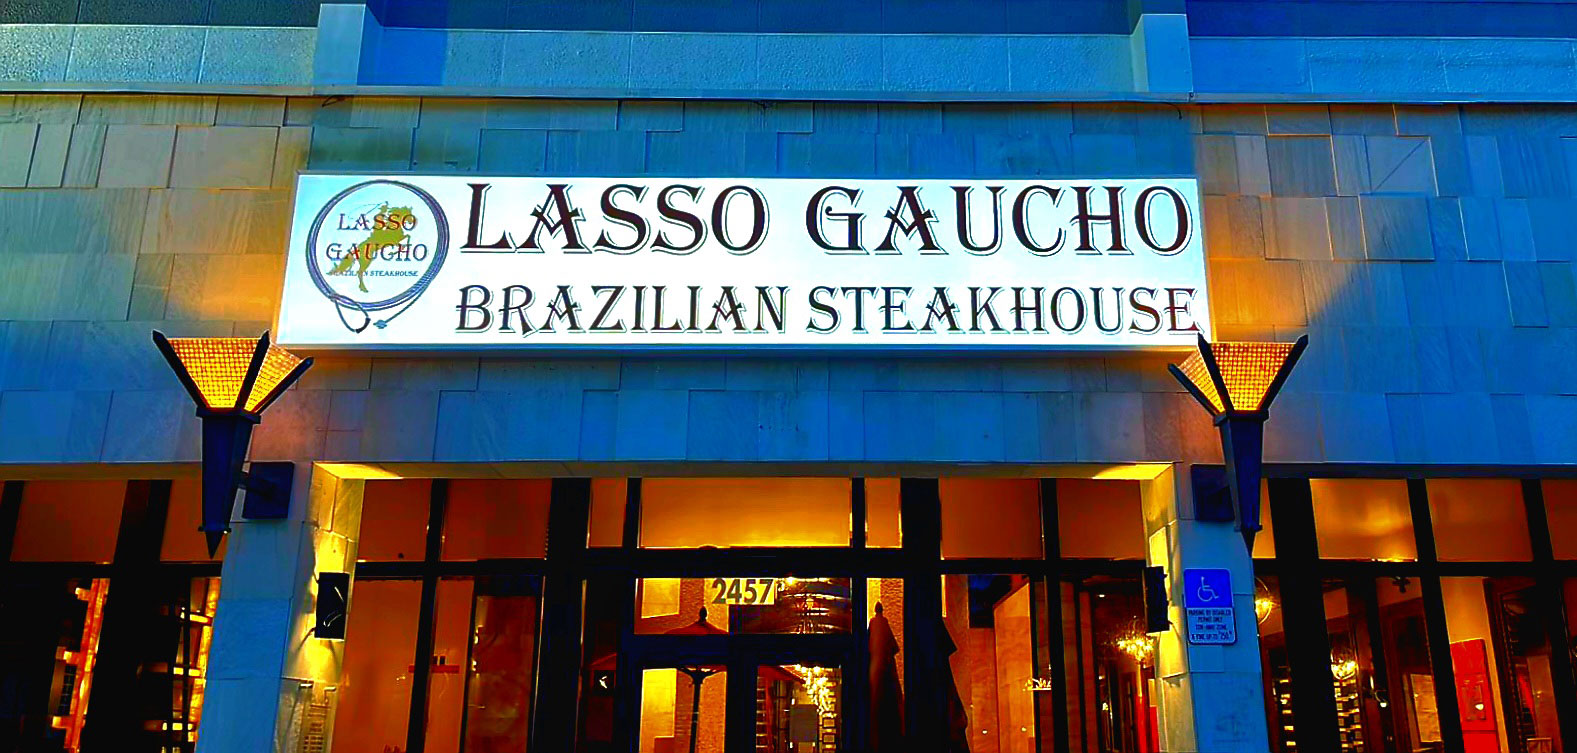 Lasso Gaucho Brazilian Steakhouse